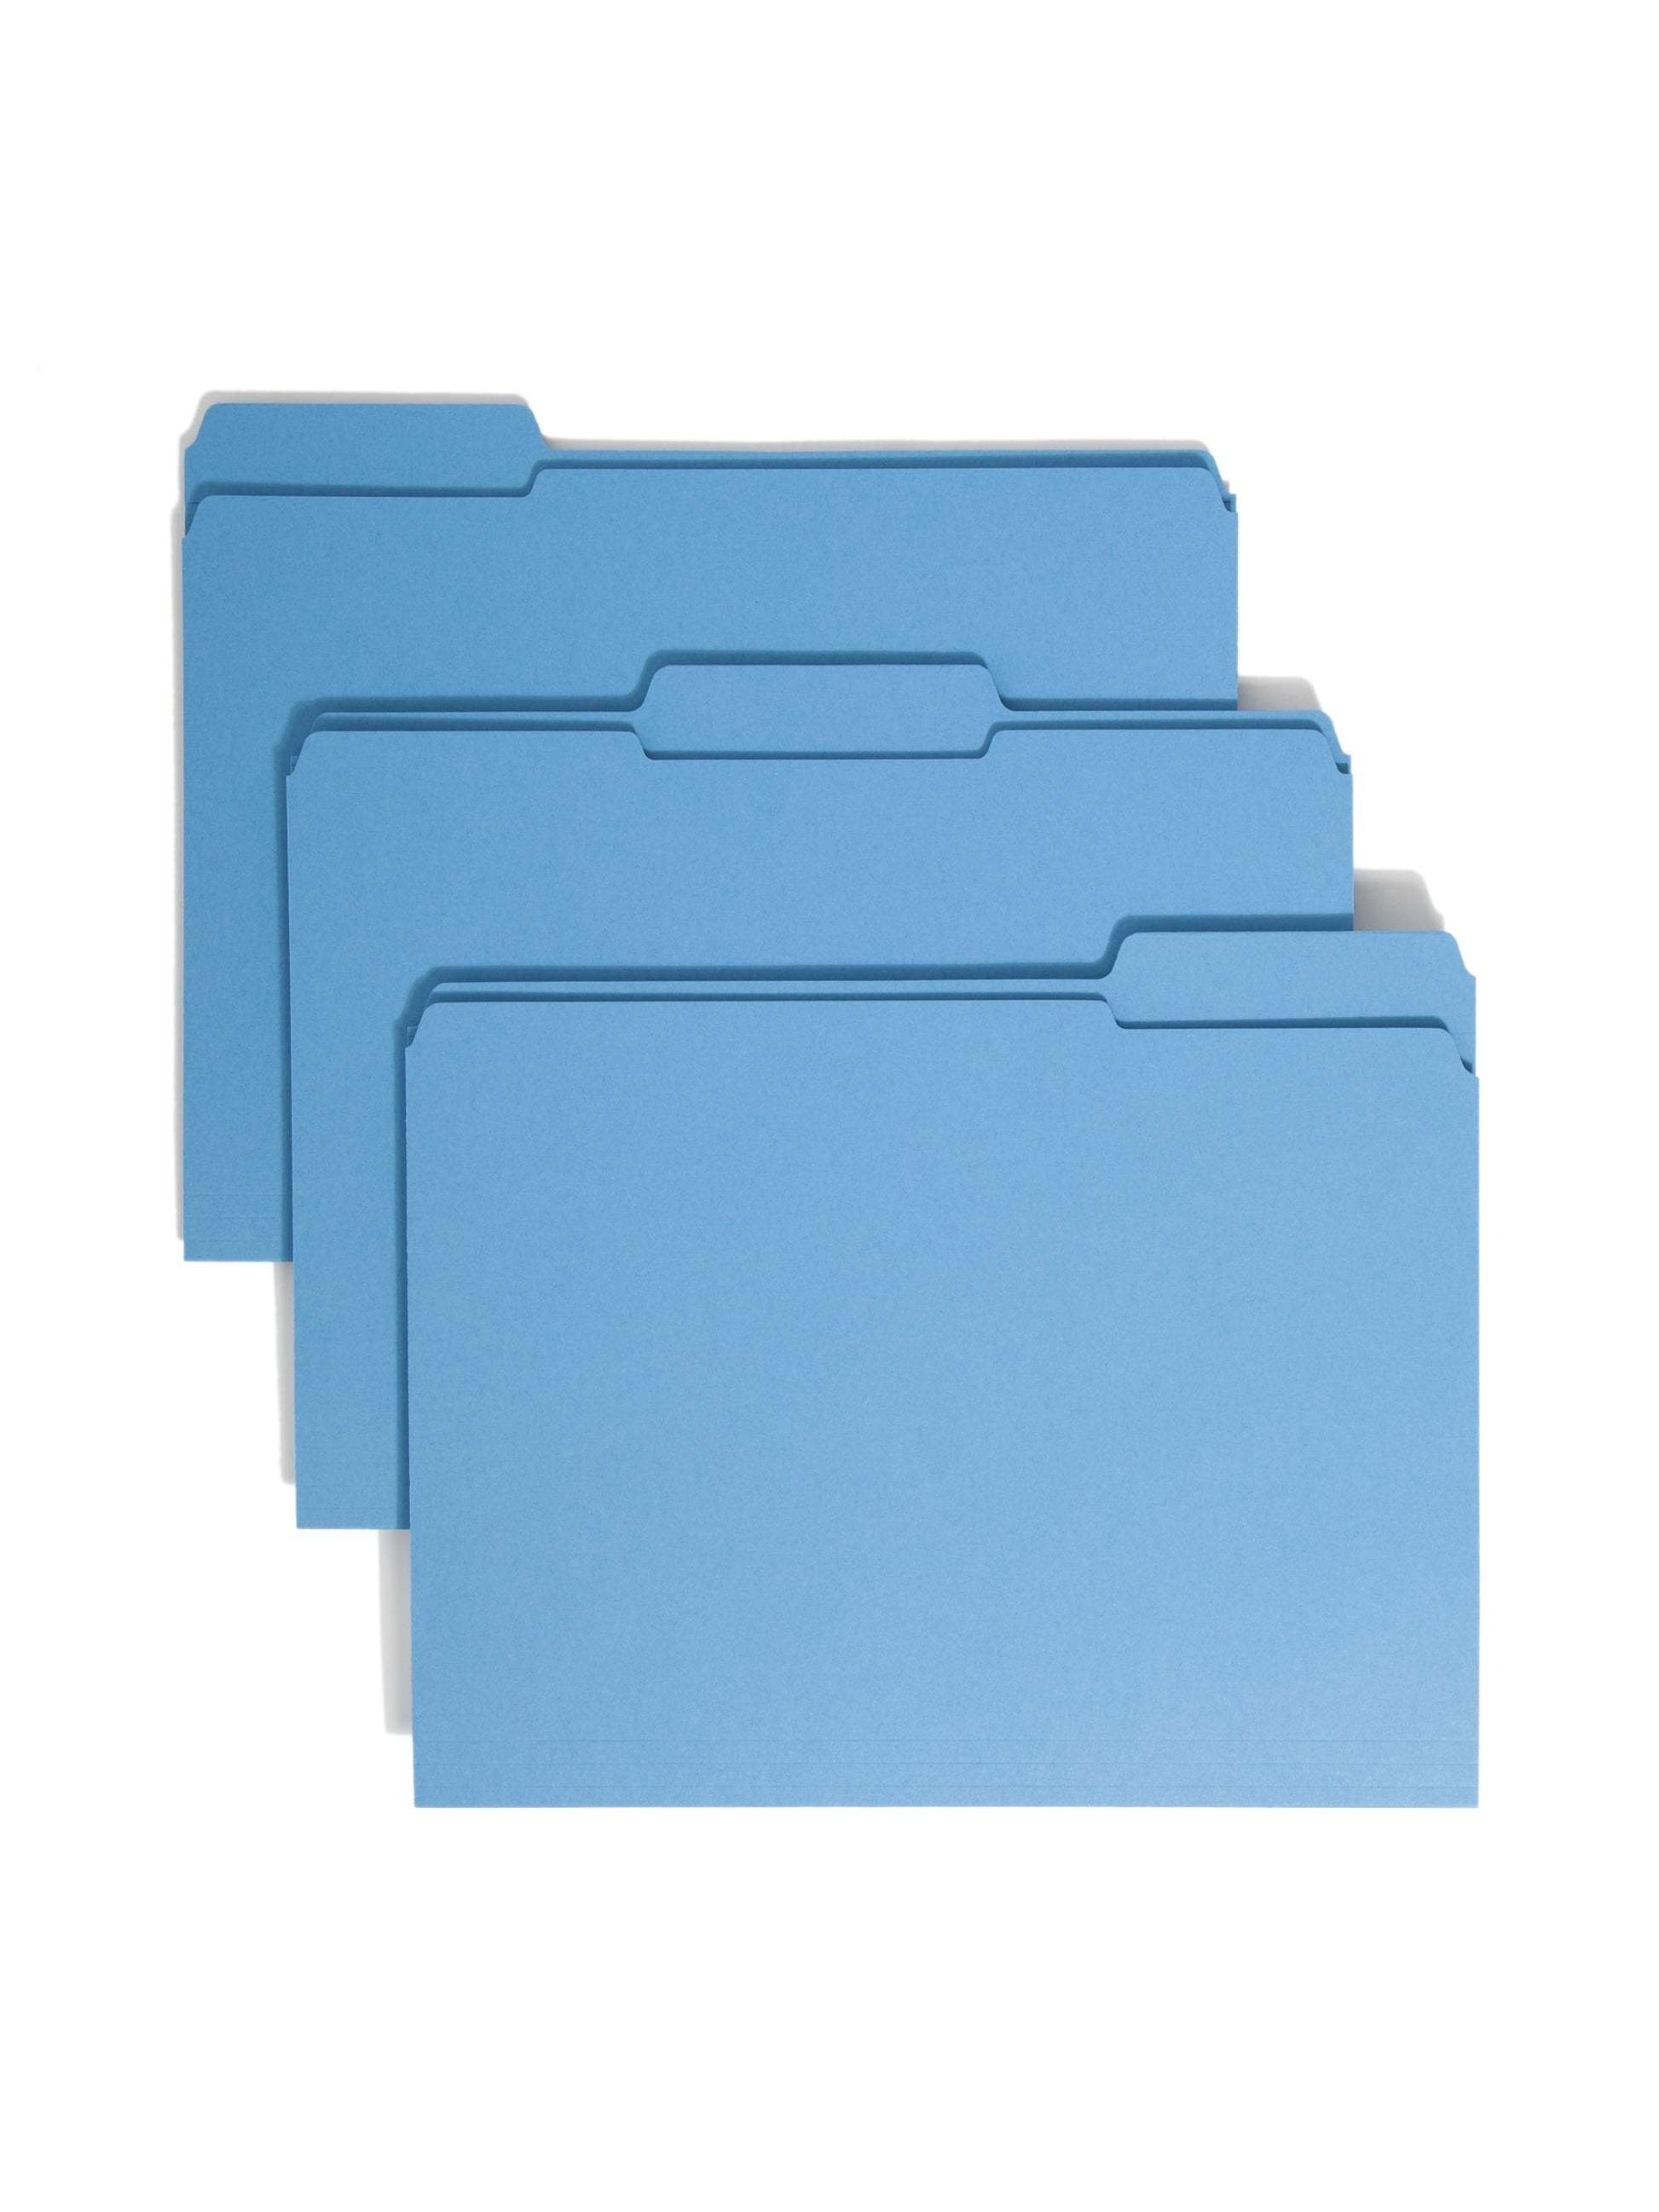 Reinforced Tab File Folders, 1/3-Cut Tab, Blue Color, Letter Size, Set of 100, 086486120340